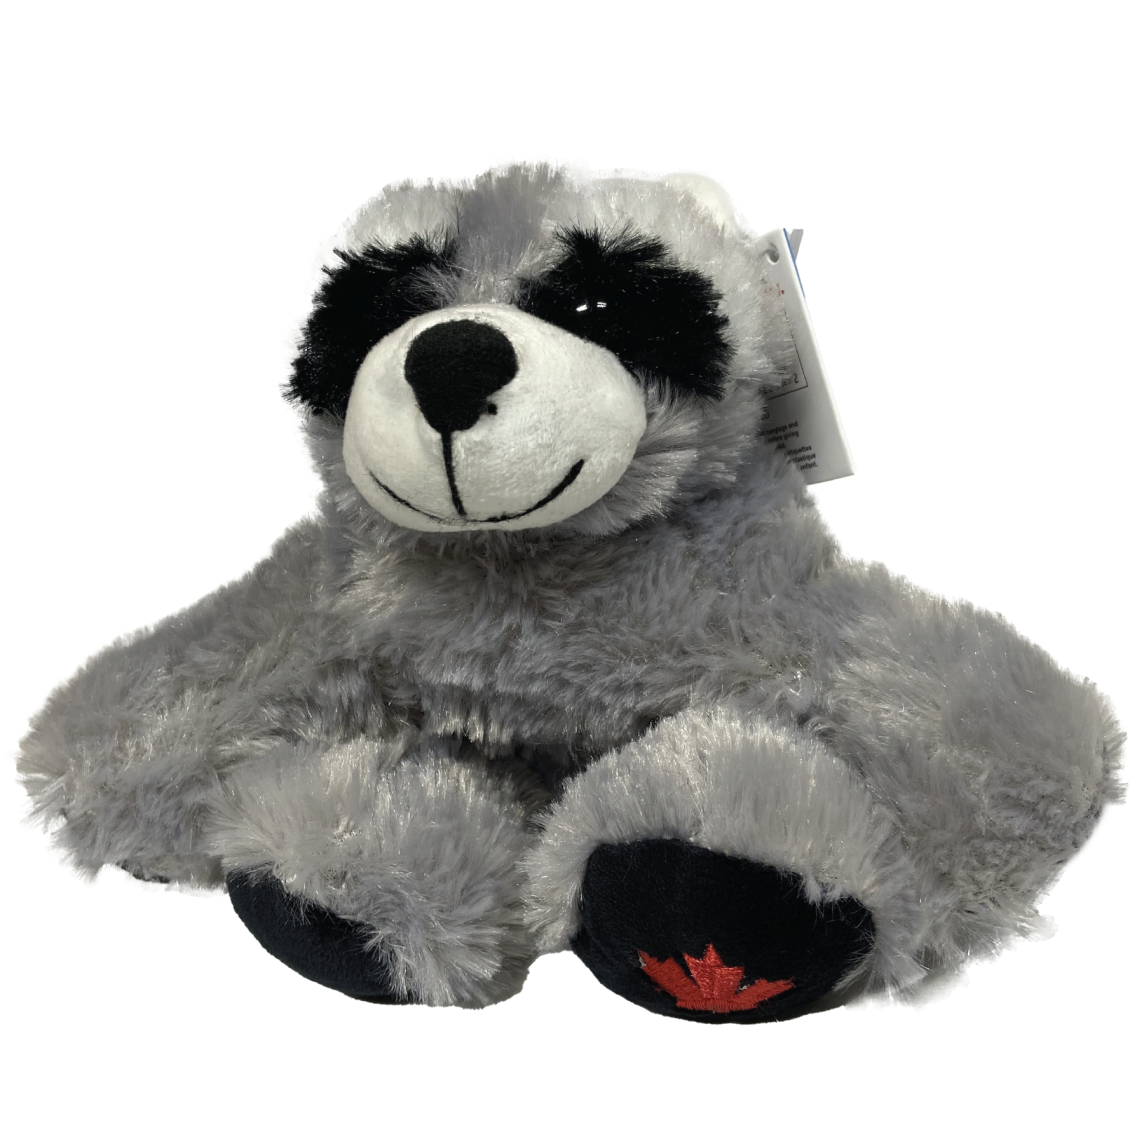 7" Maplefoot raccoon stuffed animal